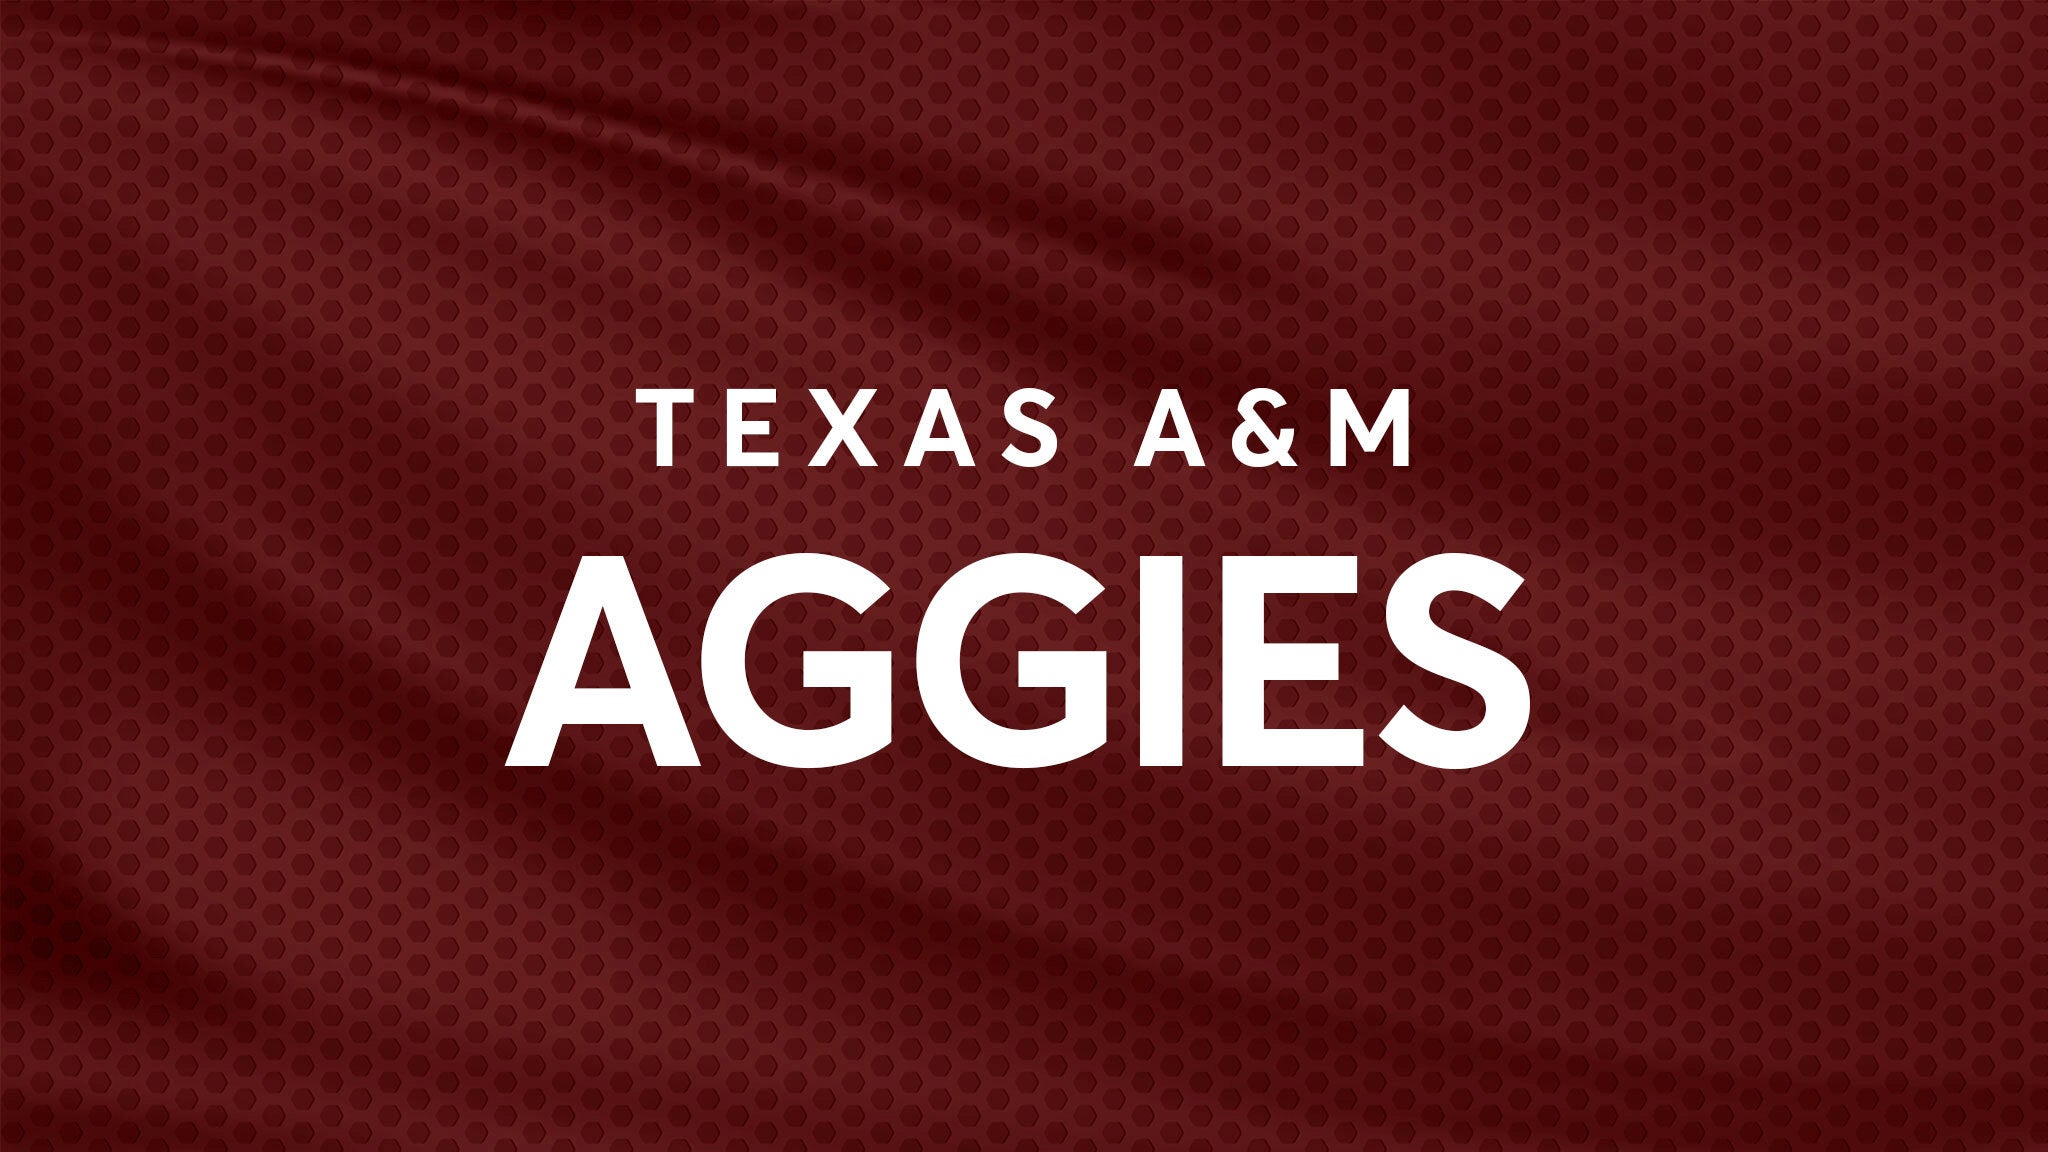 Texas A&M Aggies Baseball vs. Rice Owls Baseball